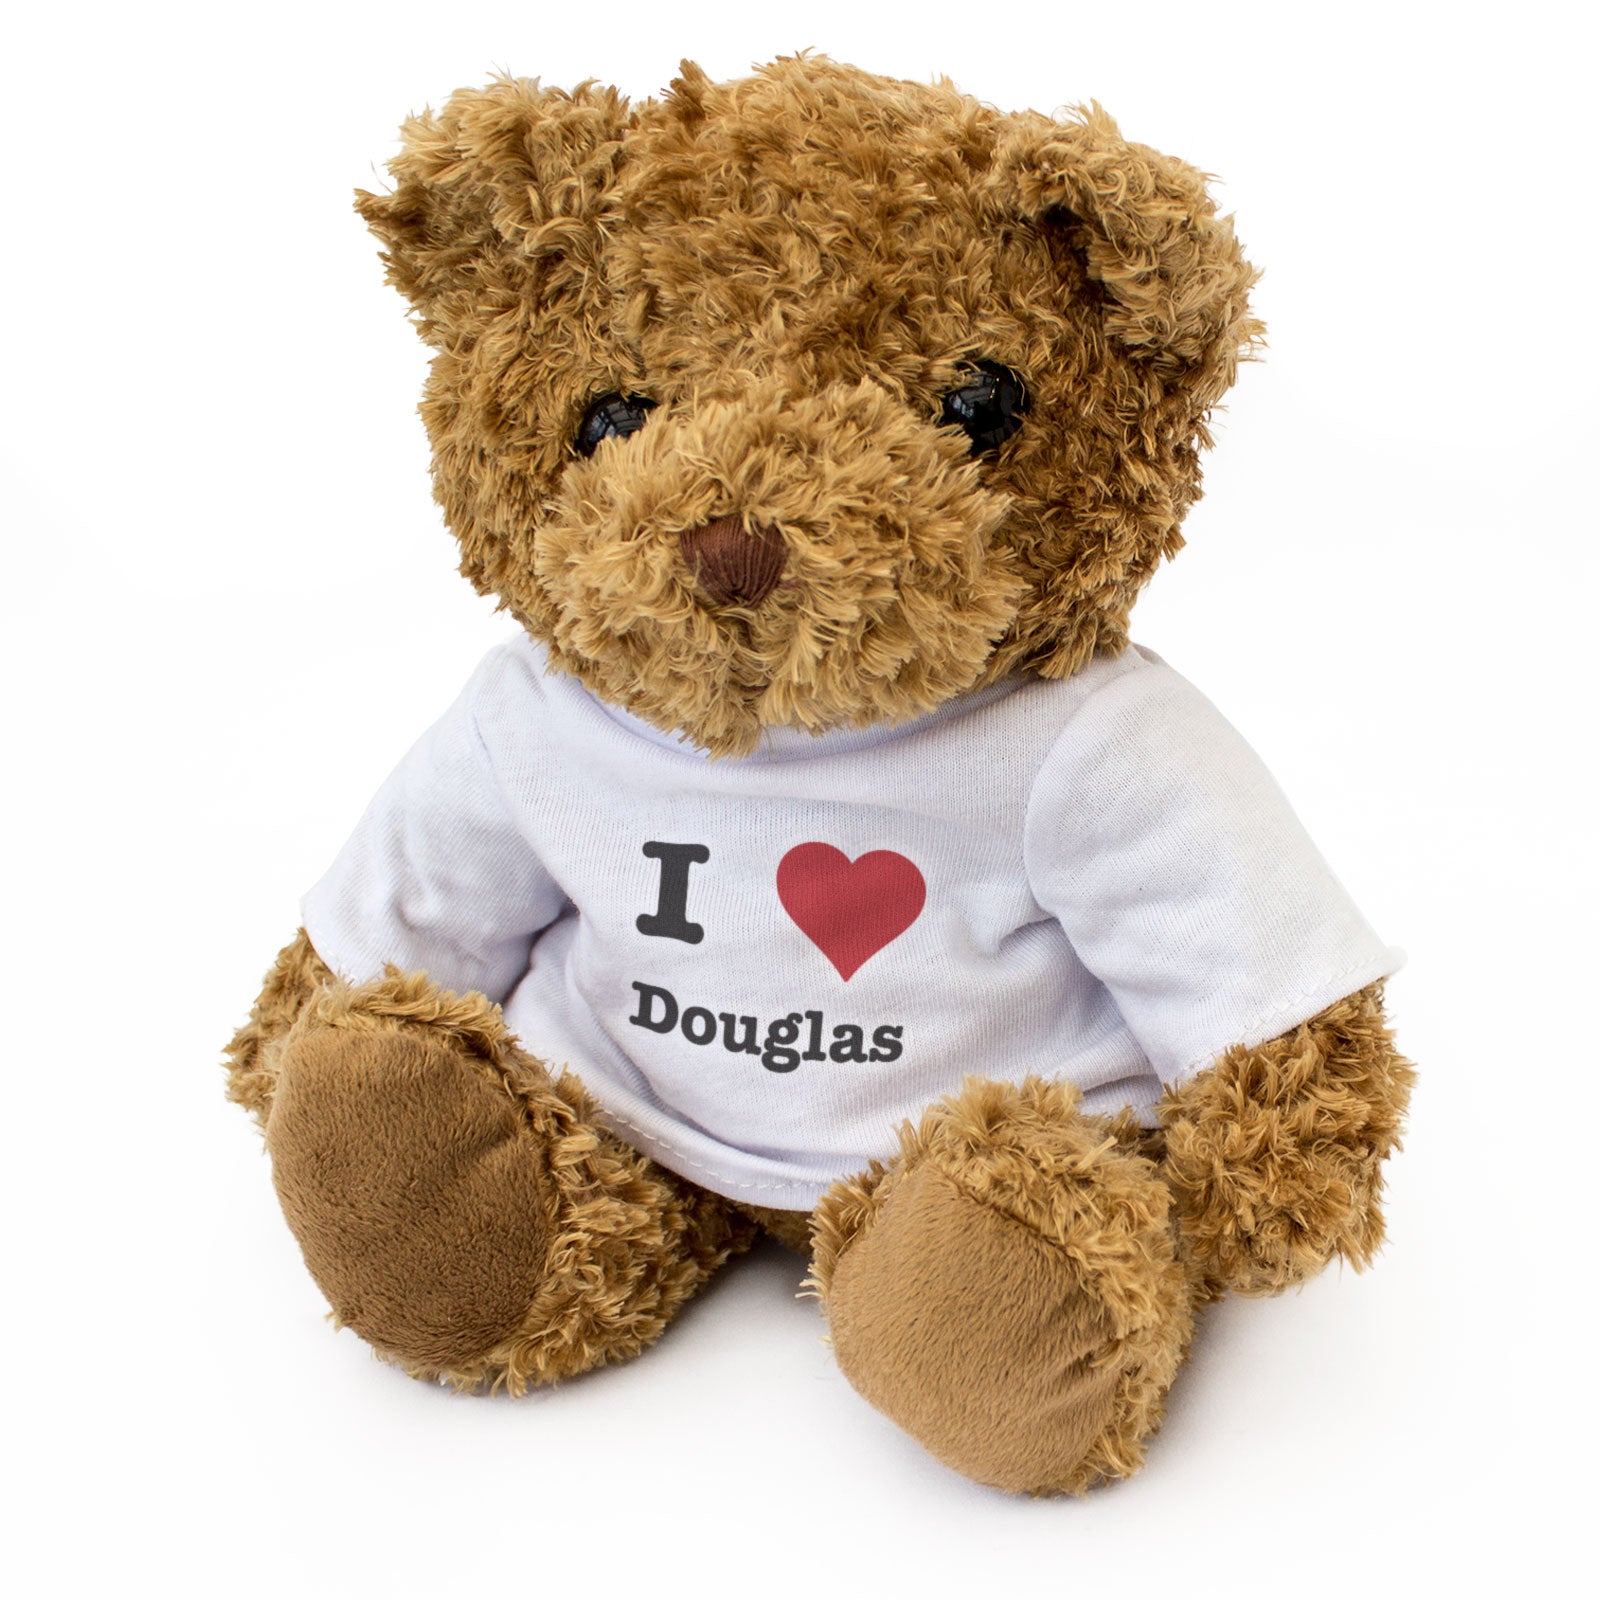 I Love Douglas - Teddy Bear